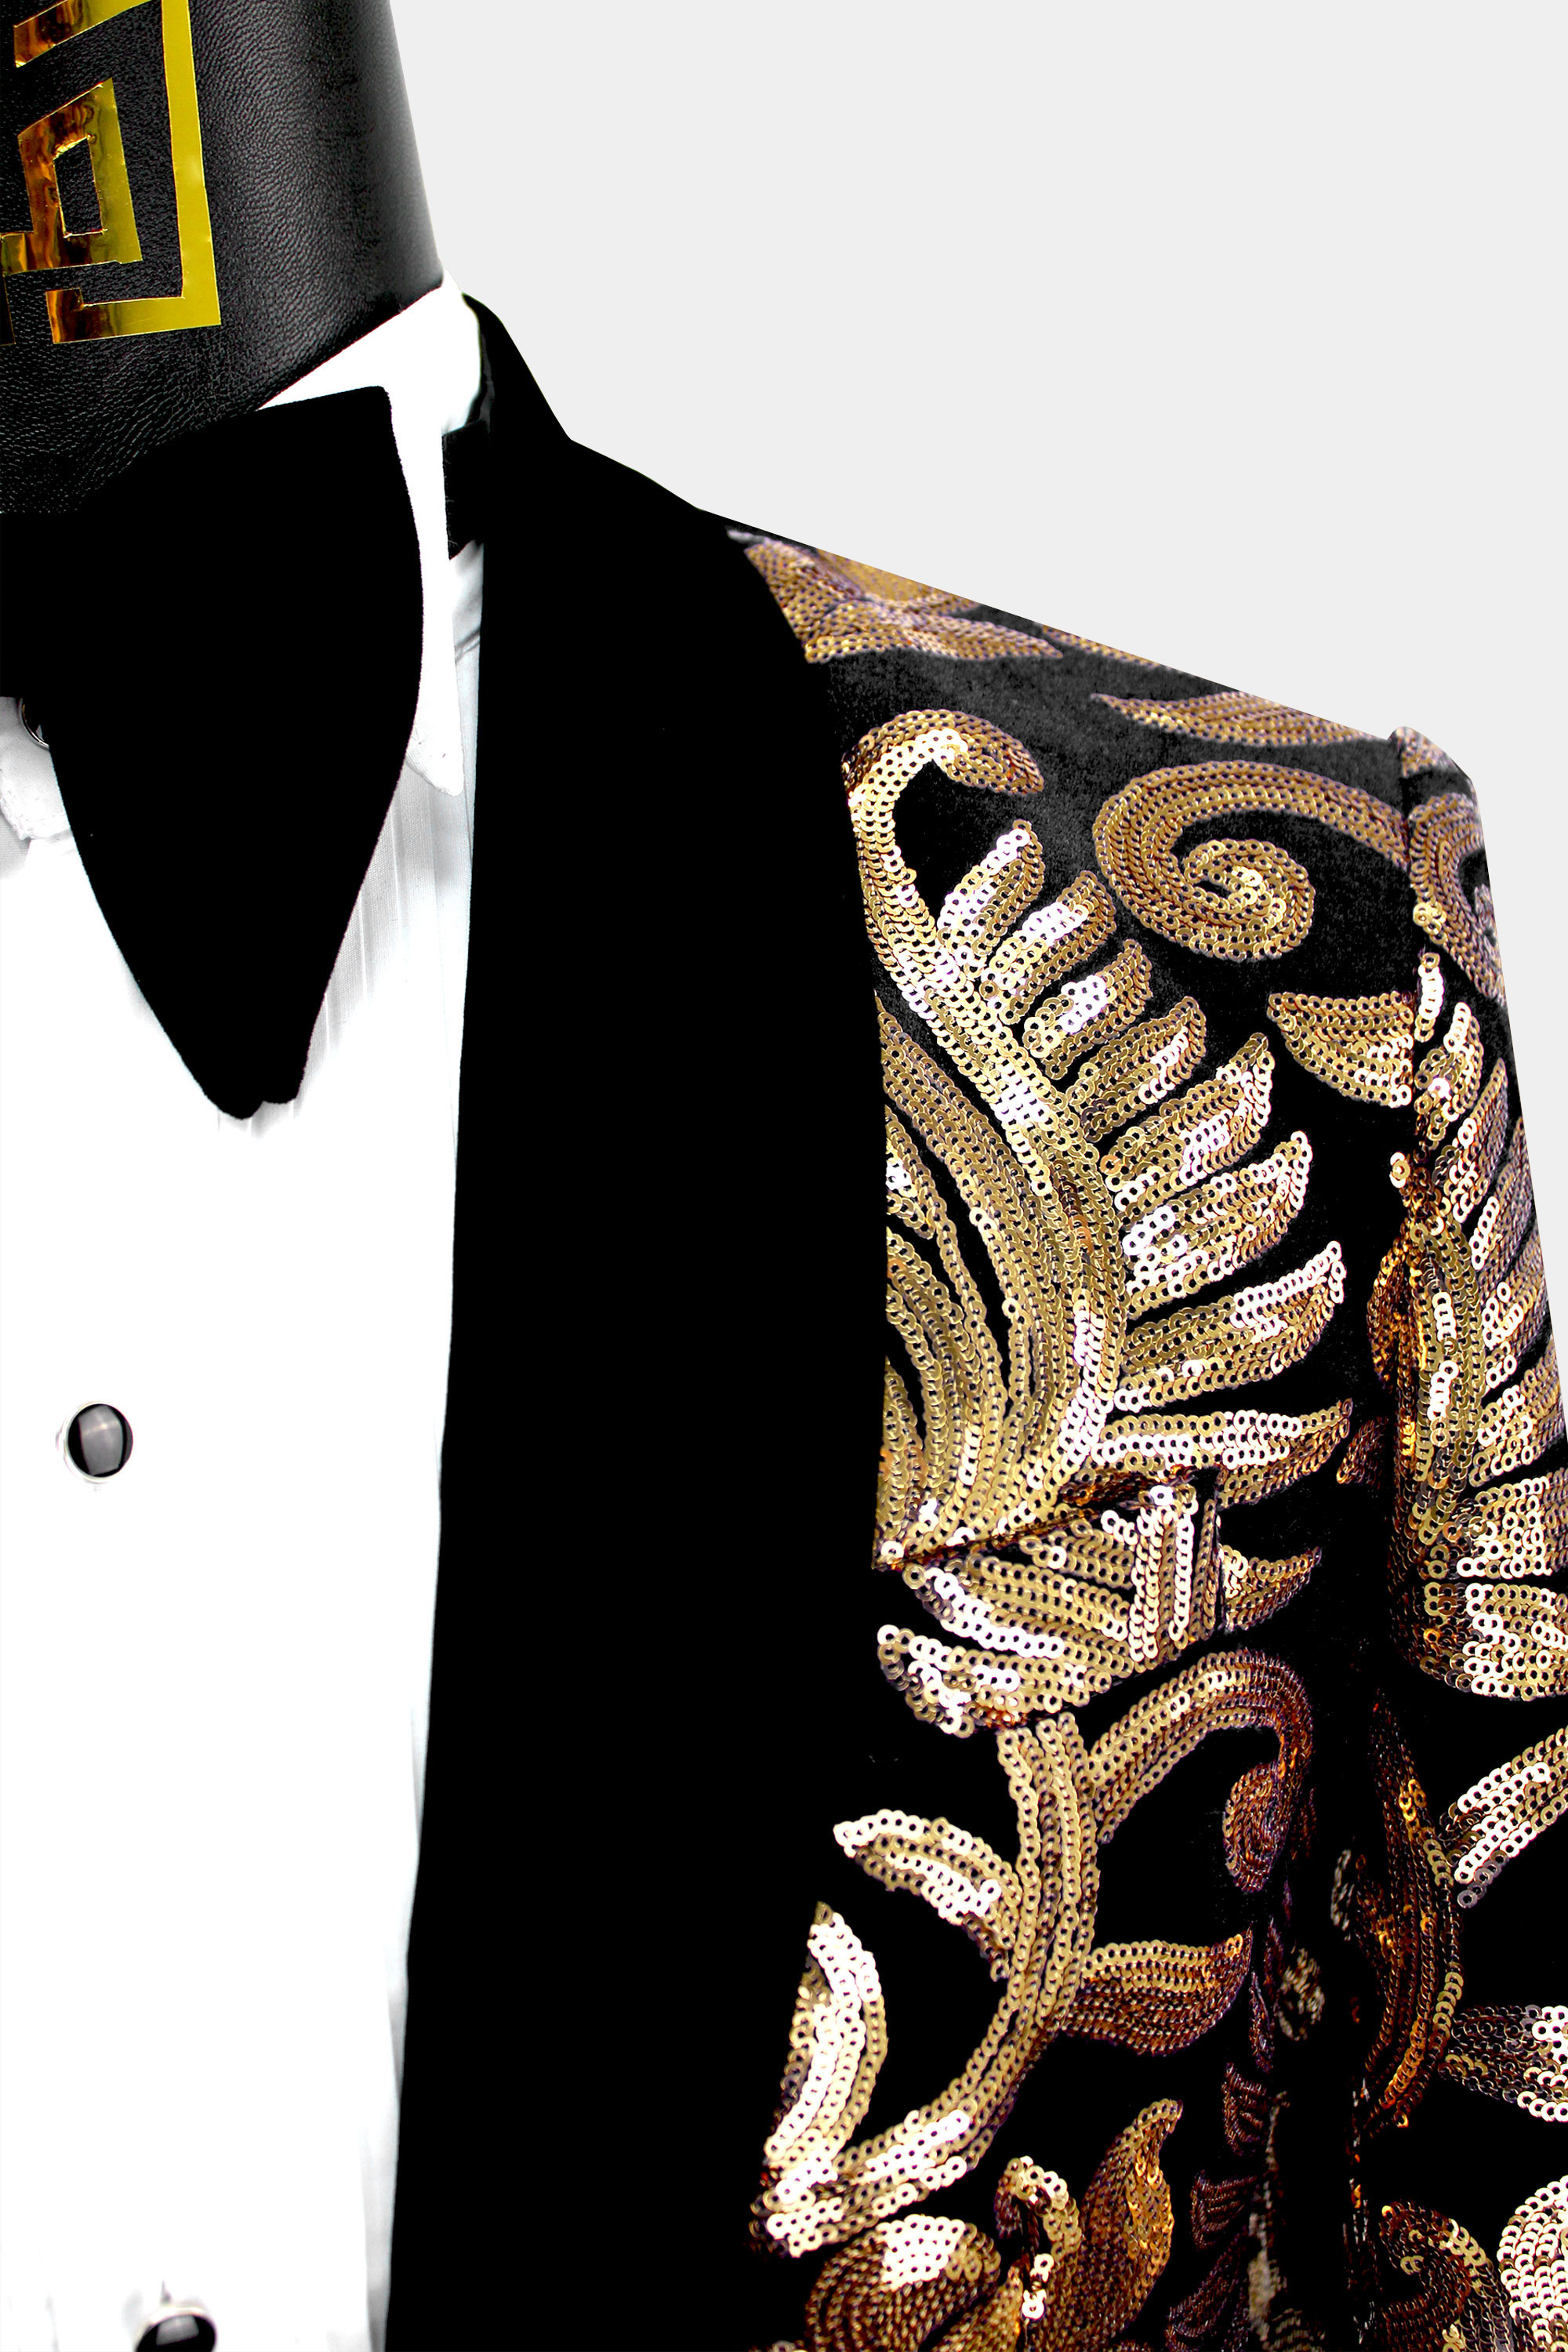 Mens-Black-and-Gold-Blazer-Prom-Suit-Wedding-Jacket-from-Gentlemansguru.com.